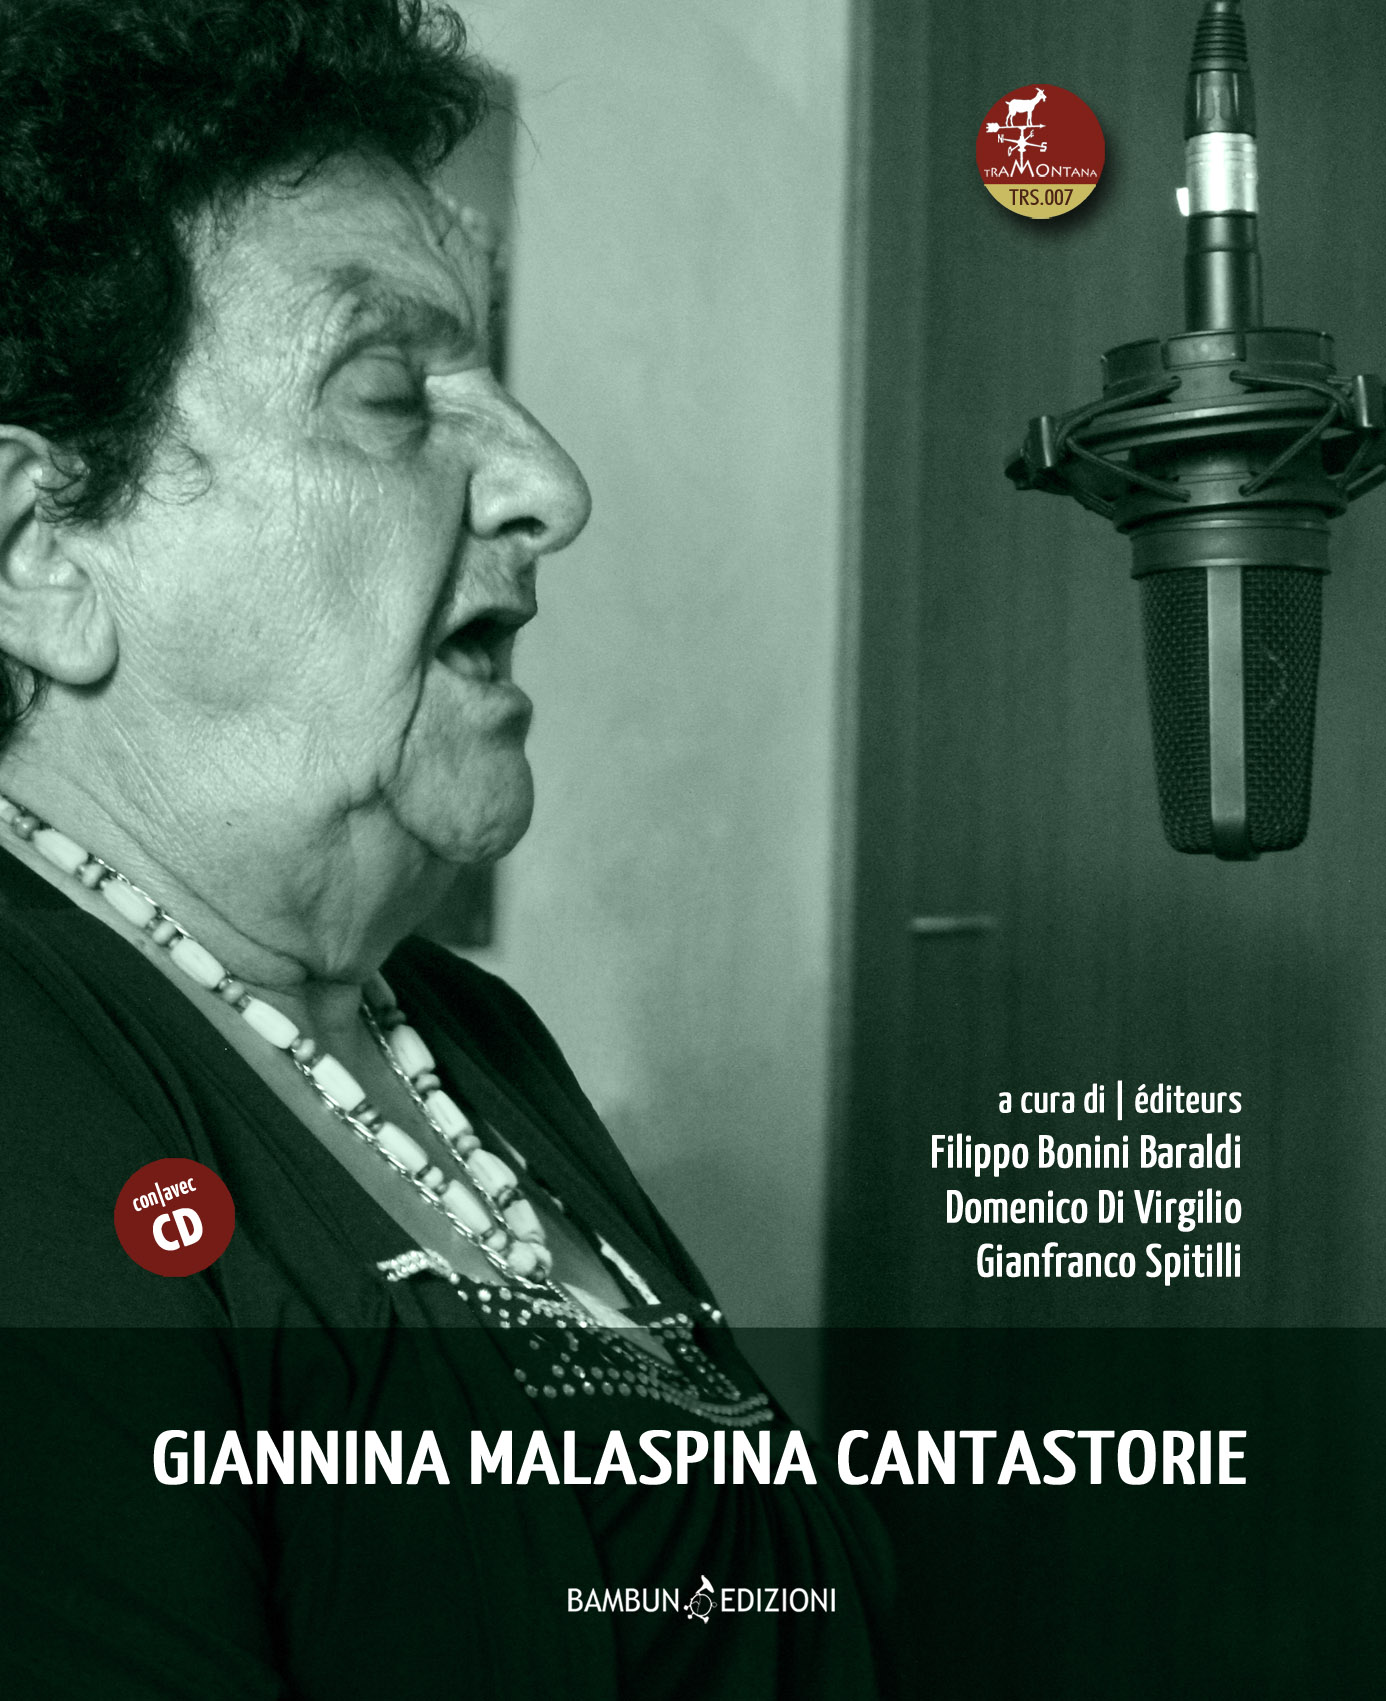 Giannina Malaspina Cantastorie